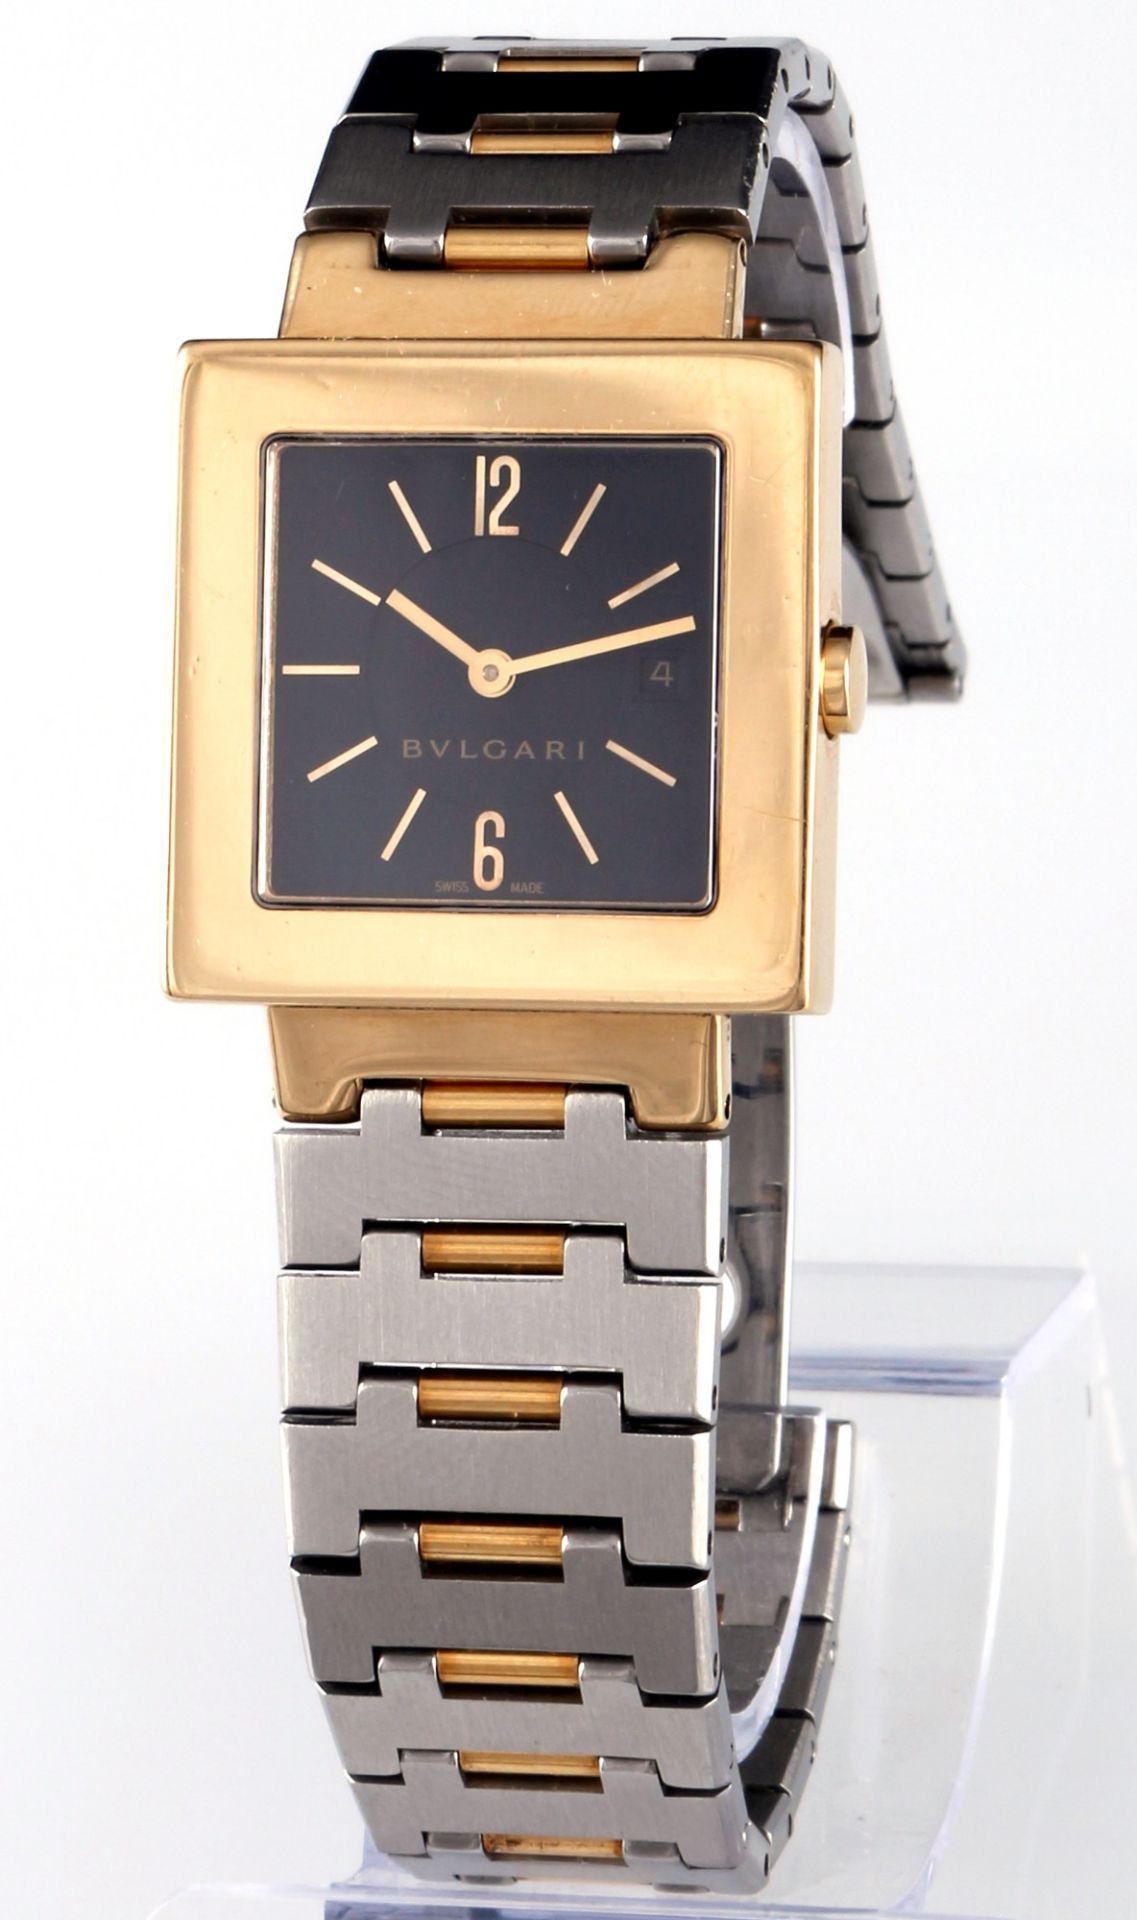 Bulgari Quadrato 750 Gold Armbanduhr SQ27G, 18K gold women's wristwatch,